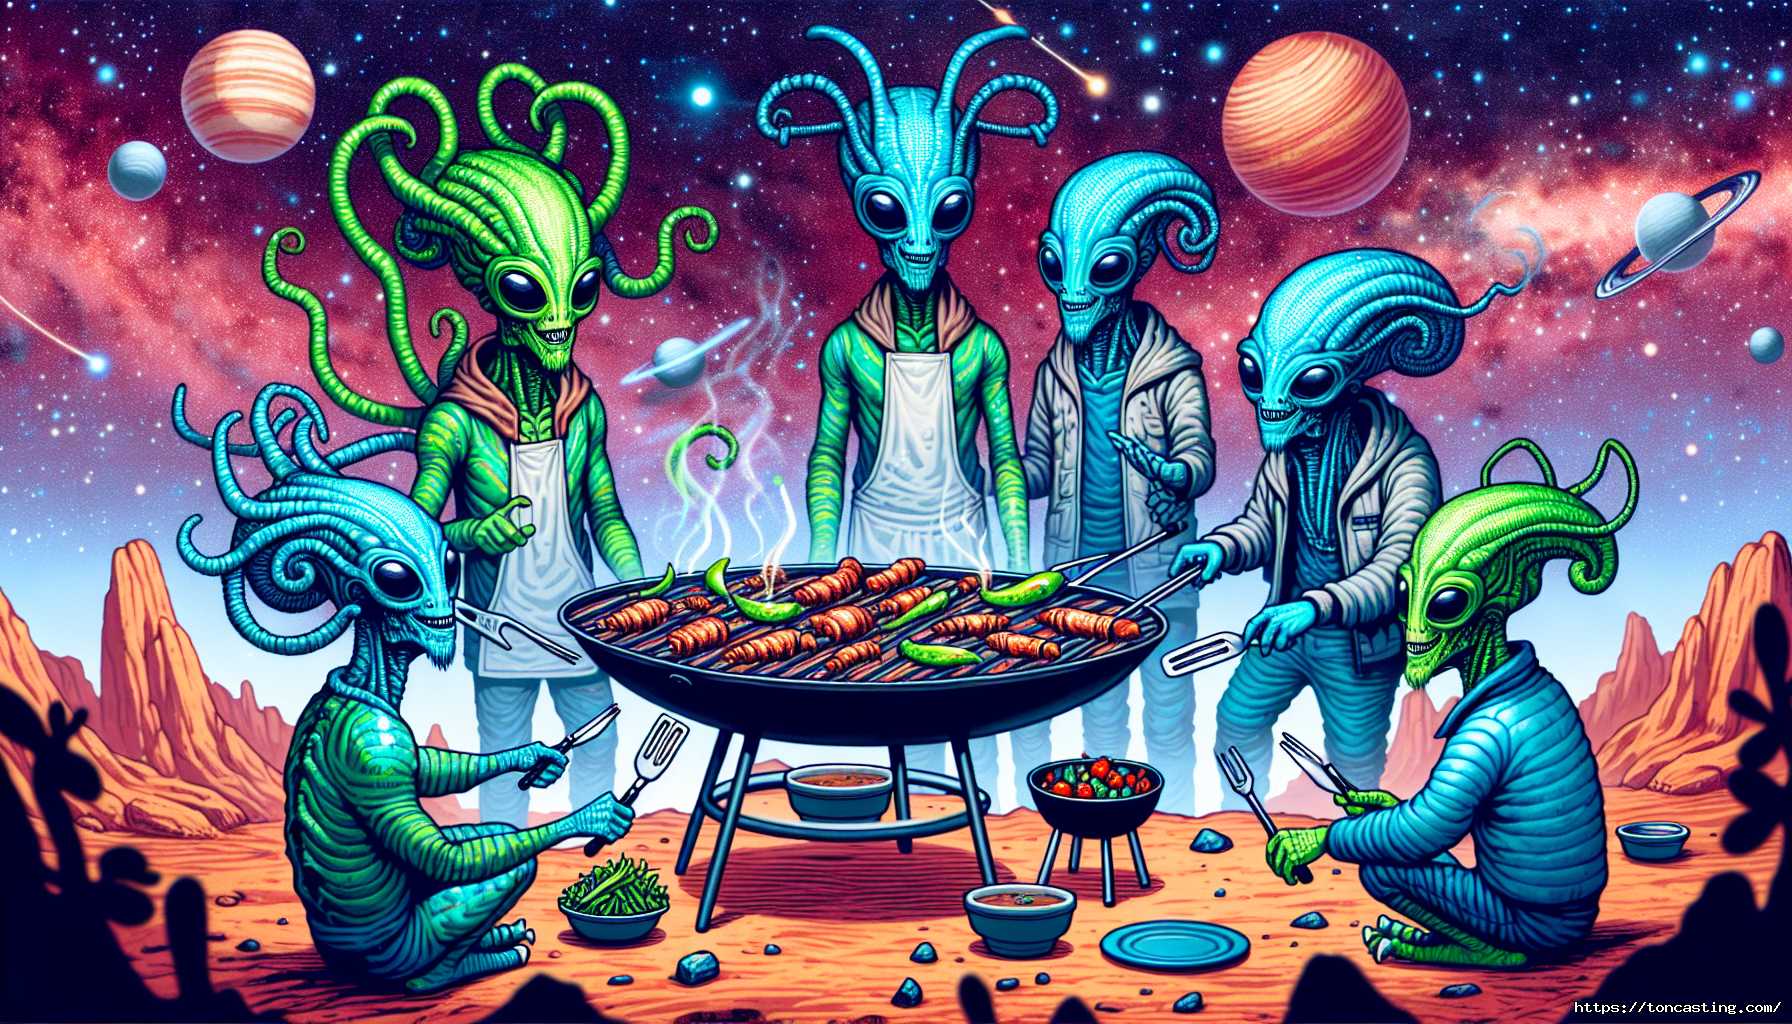 Des extraterrestres font un barbecue sous un ciel étoilé.